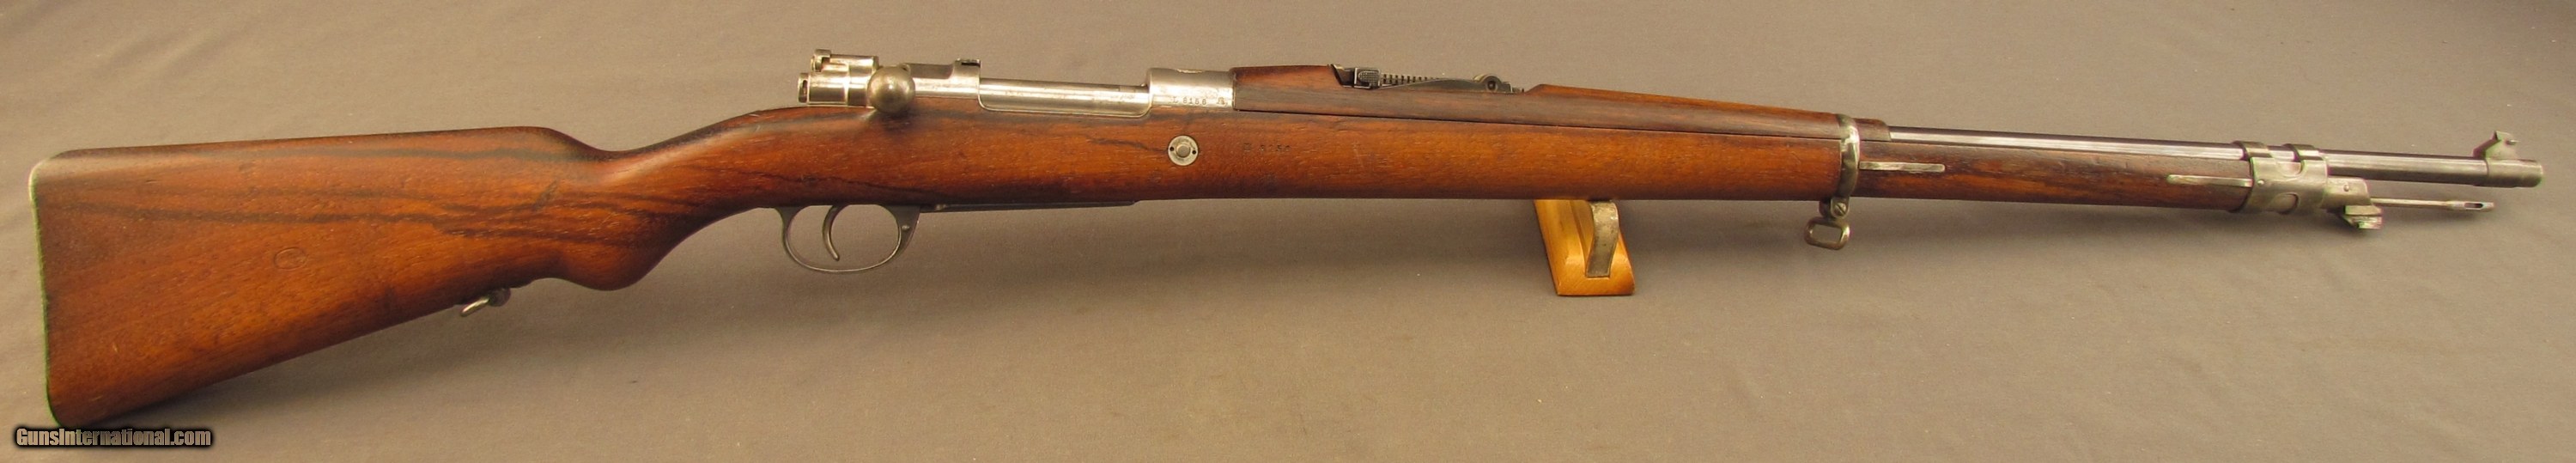 Image result for Argentine Model mauser rifle